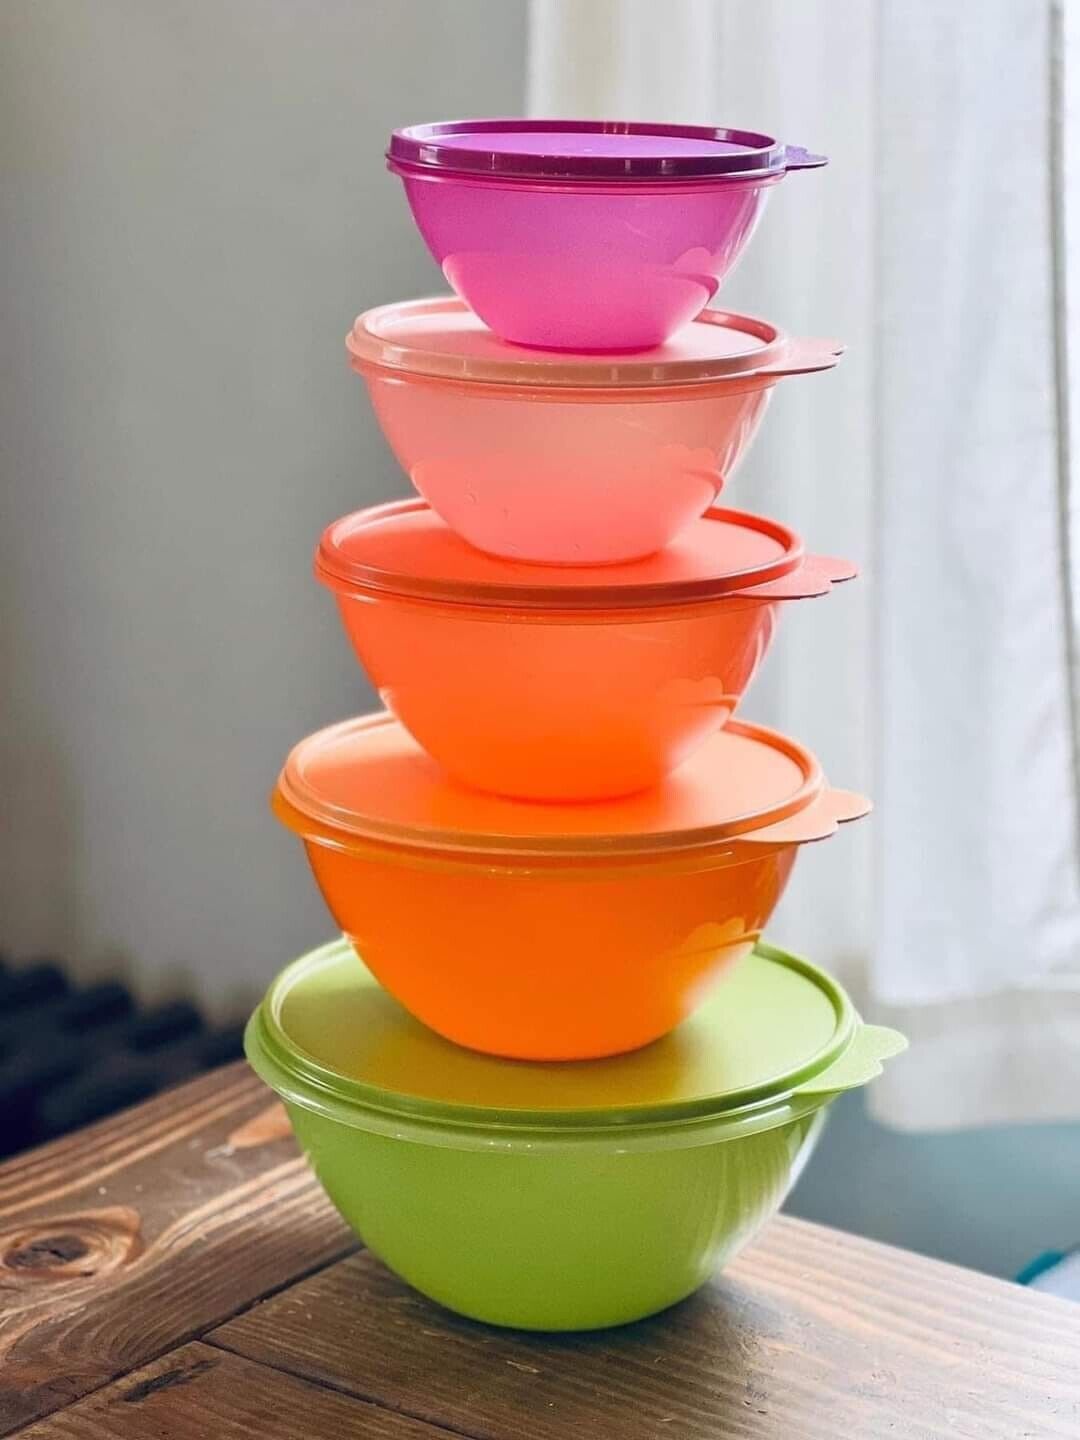 Tupperware Wonderlier Bowl Set 5 Piece Nesting Bowls Limited Colors